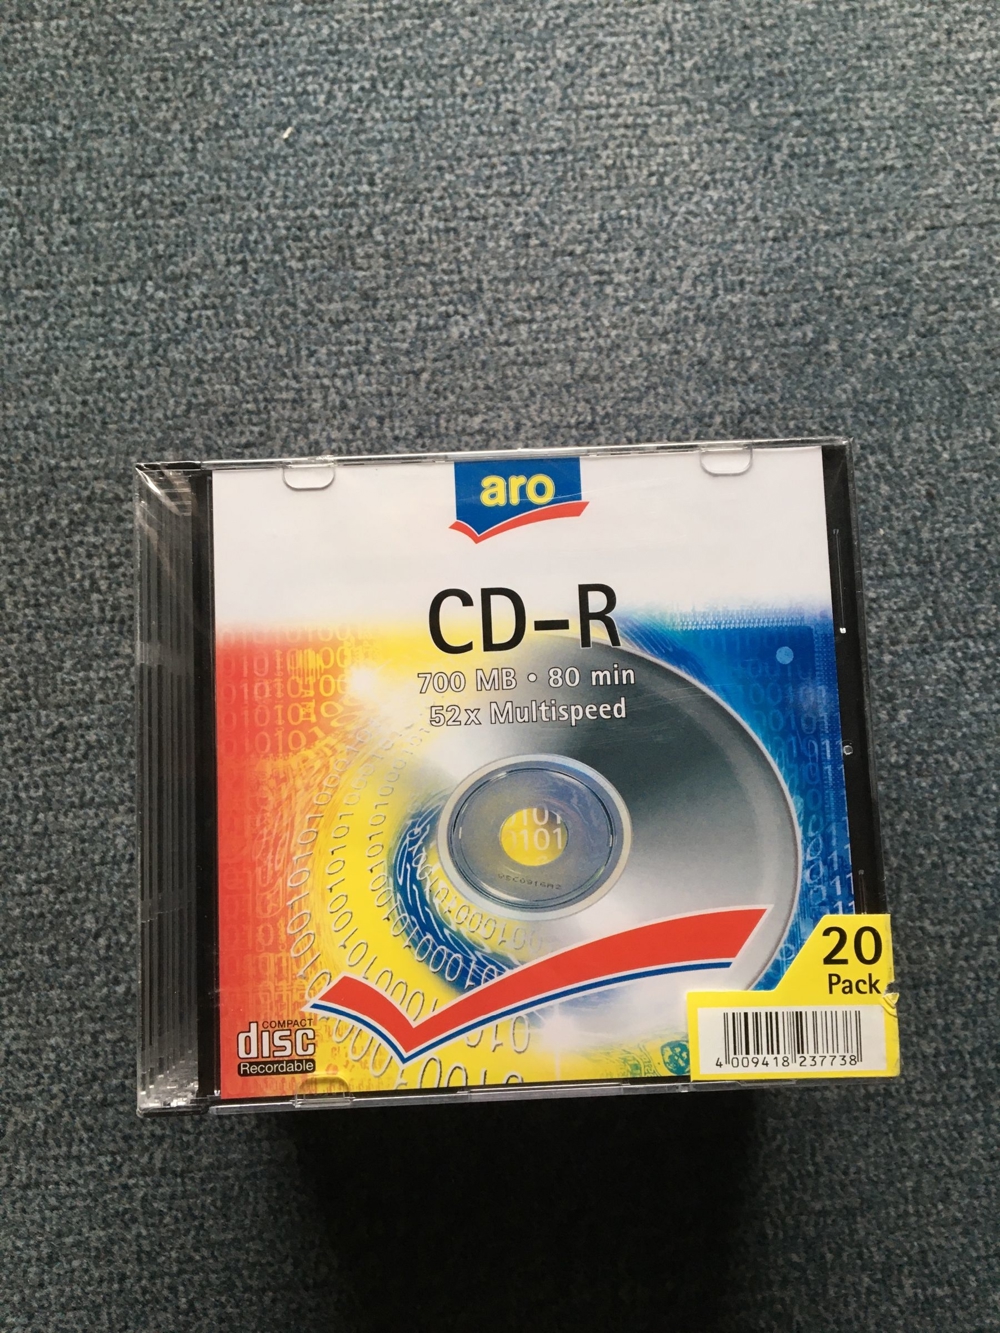 aro CD-R 700 MB, CD-Rohlinge